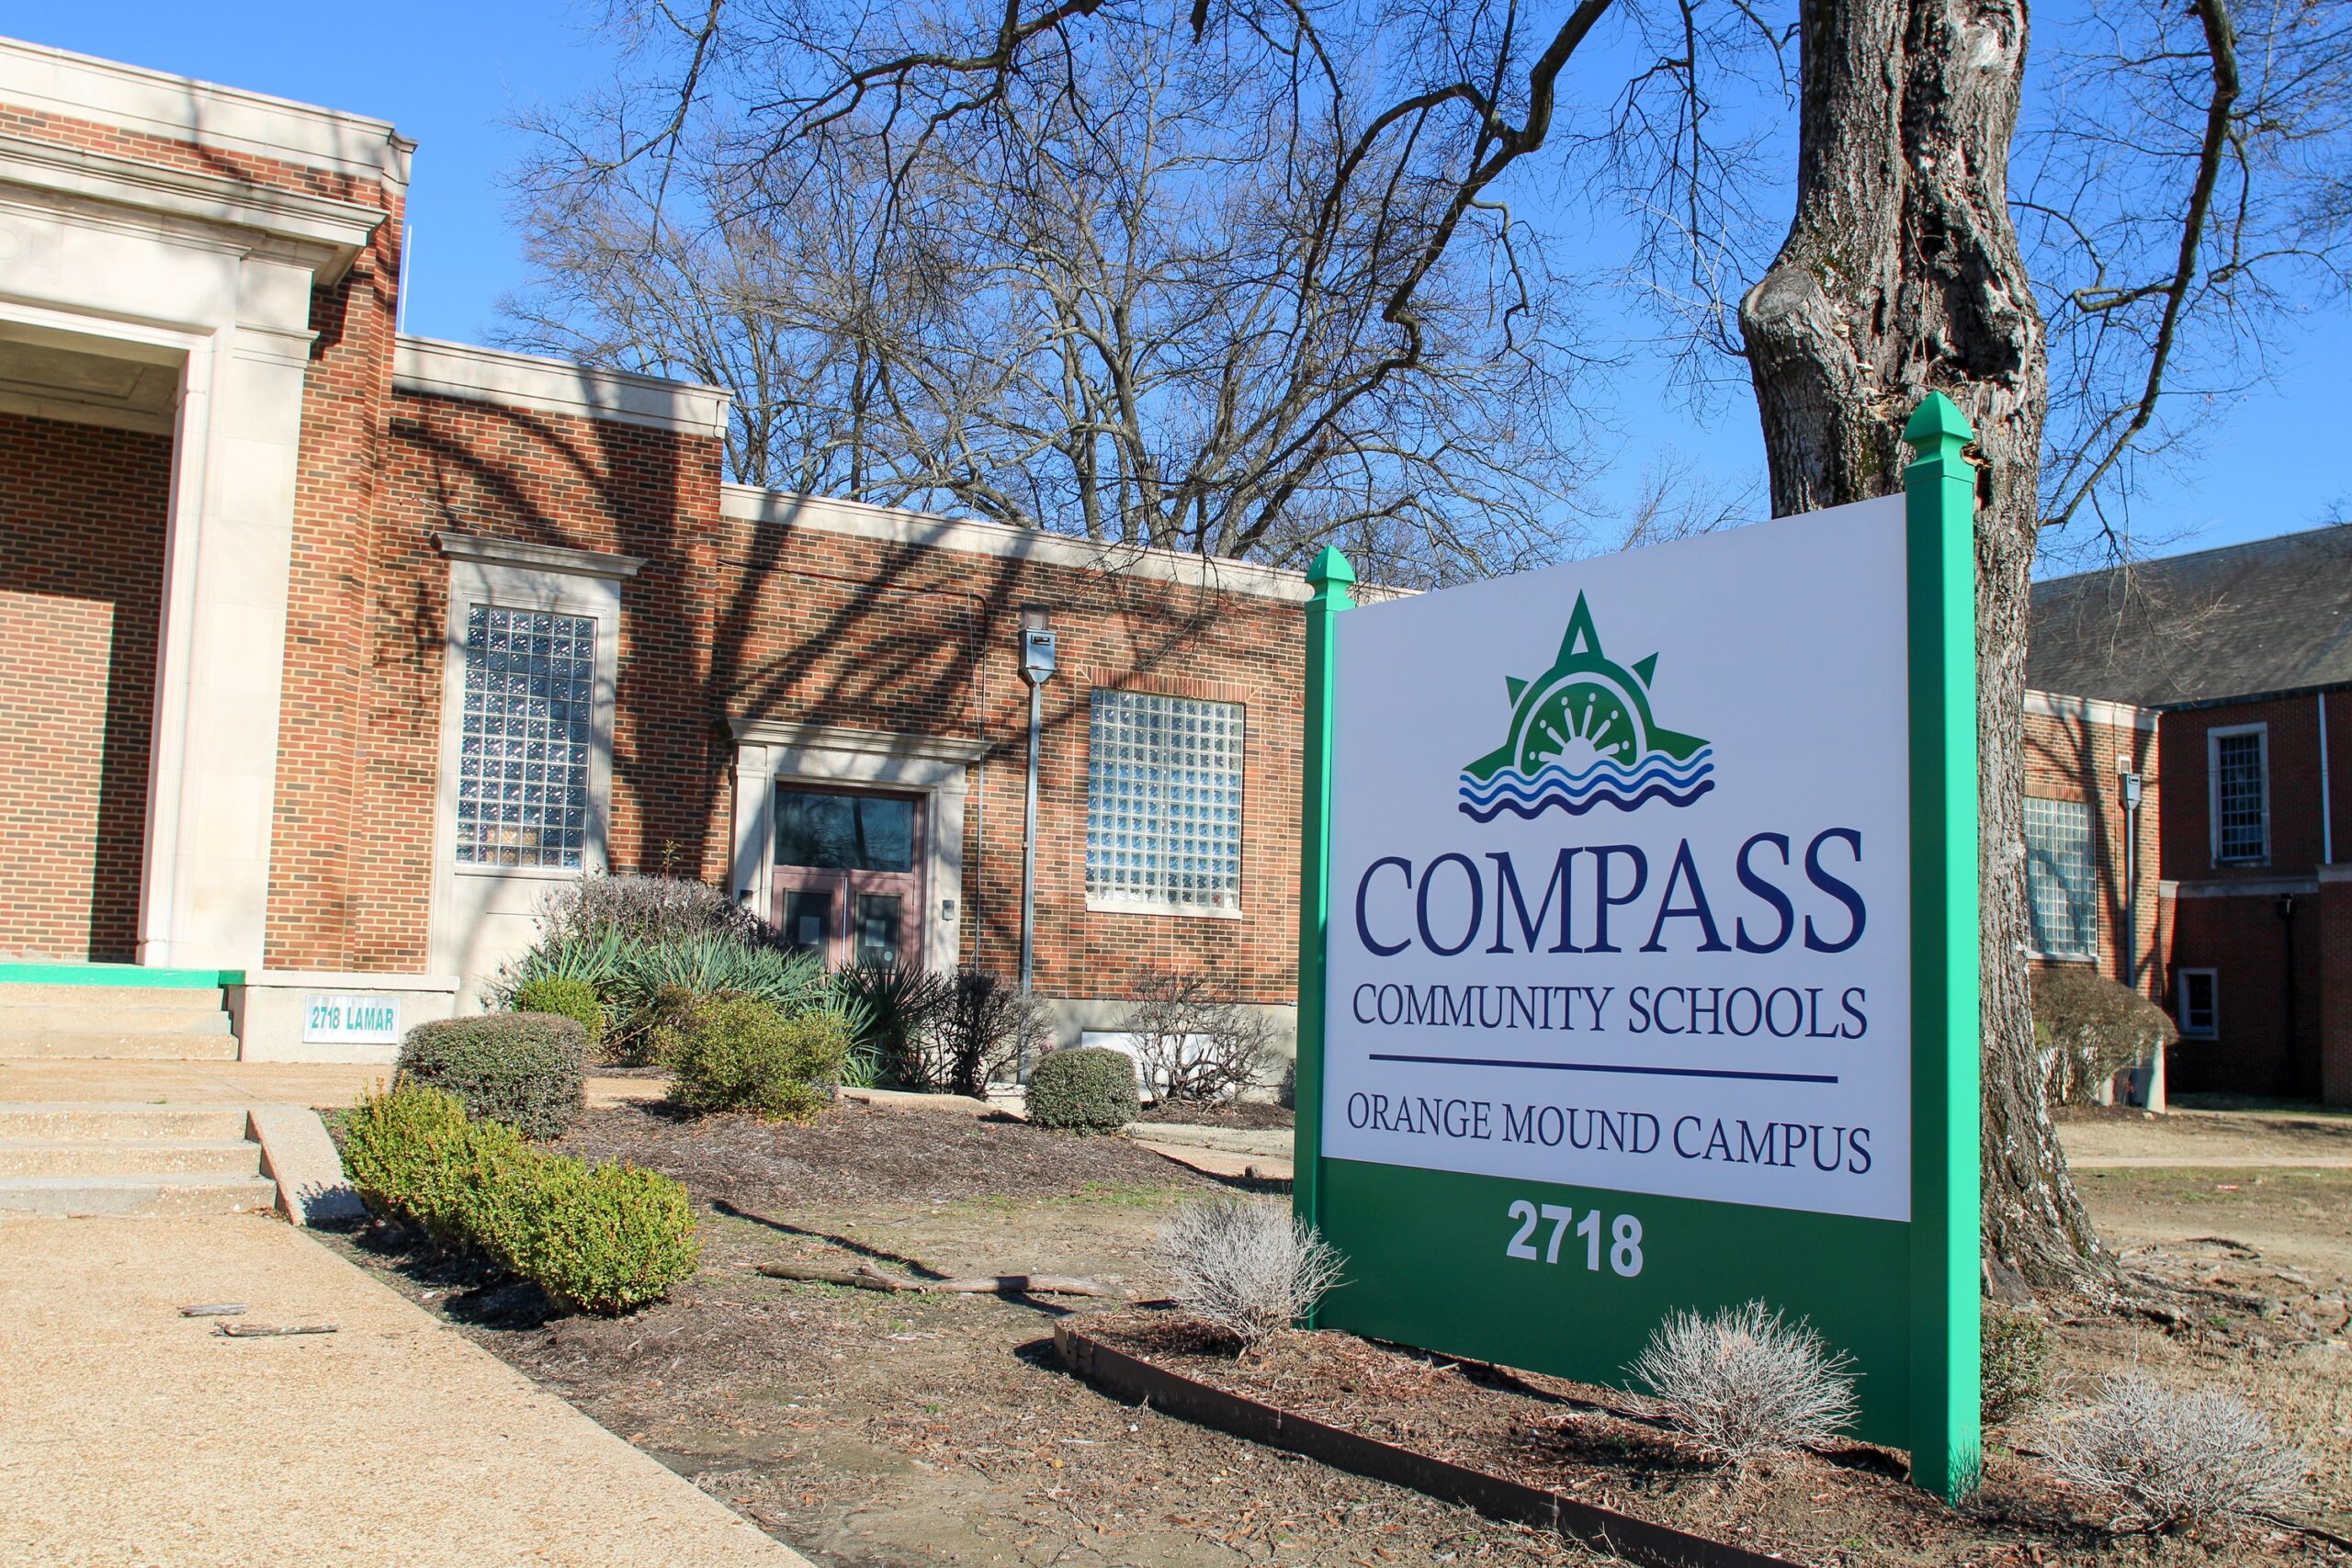 MAM 25: Compass Community Schools